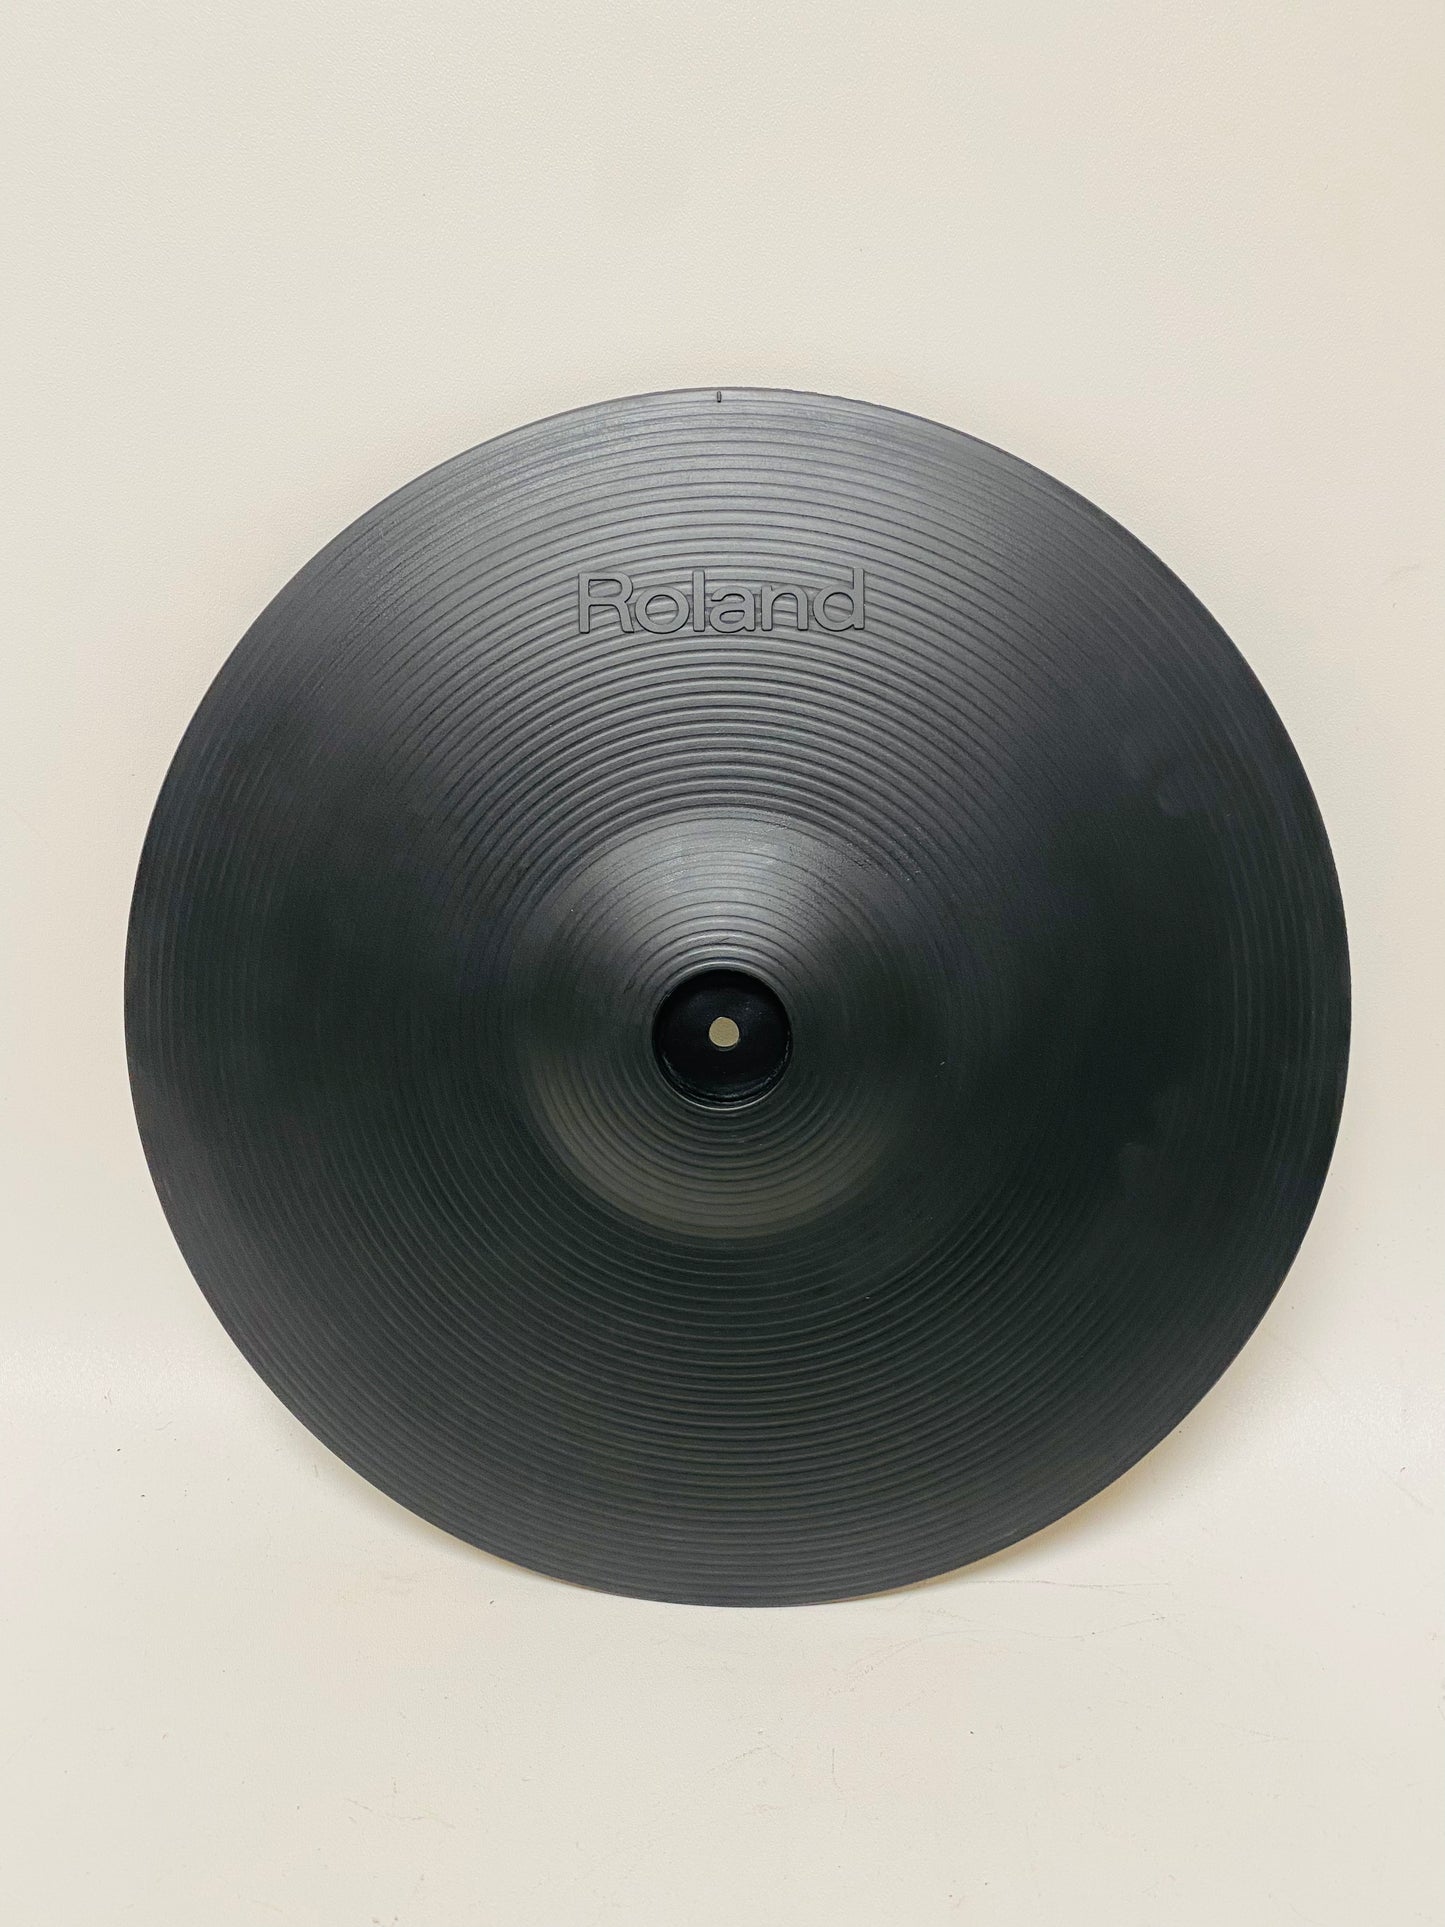 Roland CY-15R Ride Cymbal 3 Zone 15”